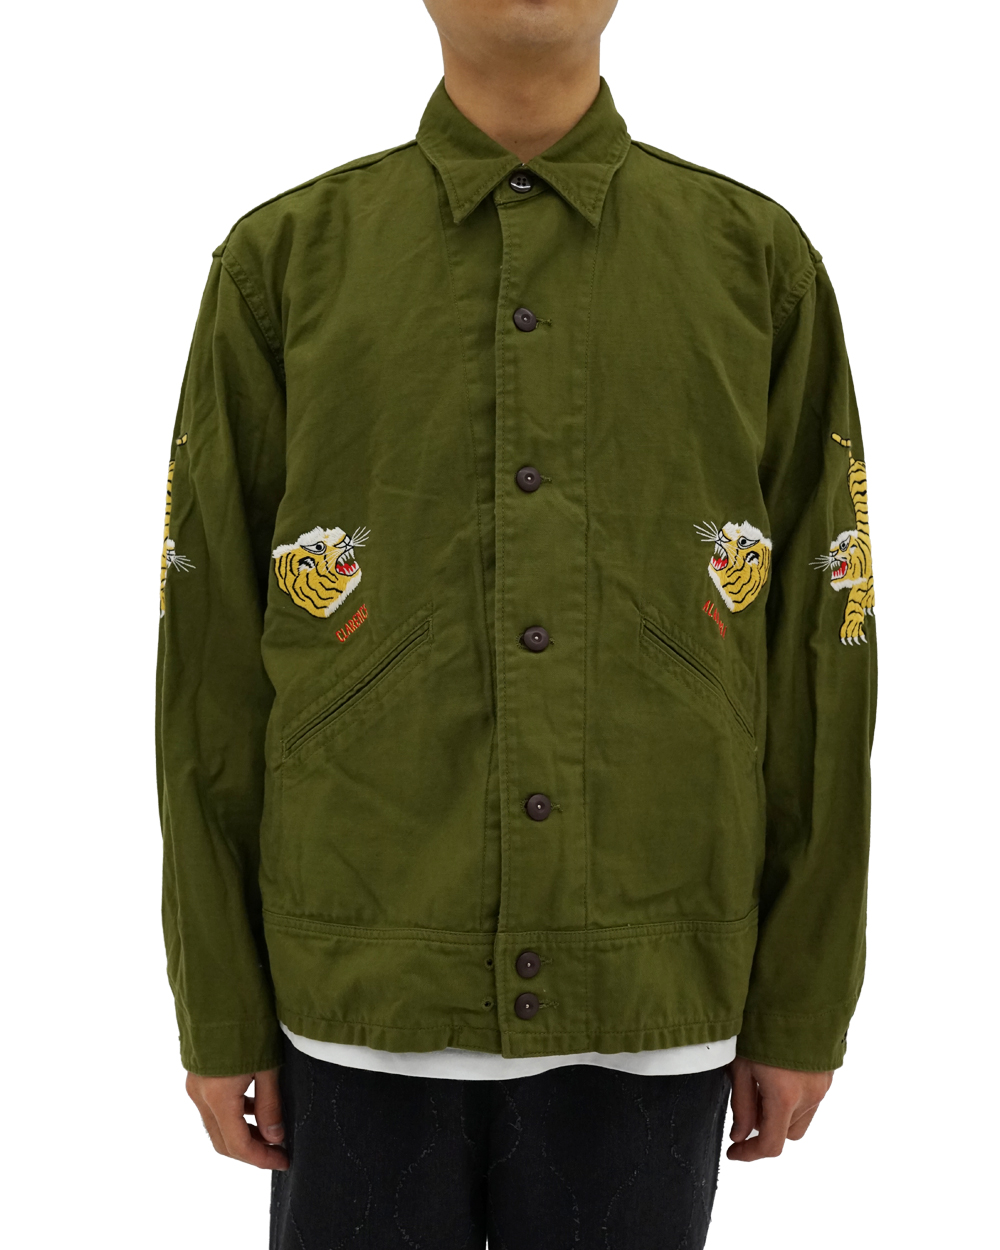 CAL O LINE Tiger souvenir jacket (Olive)